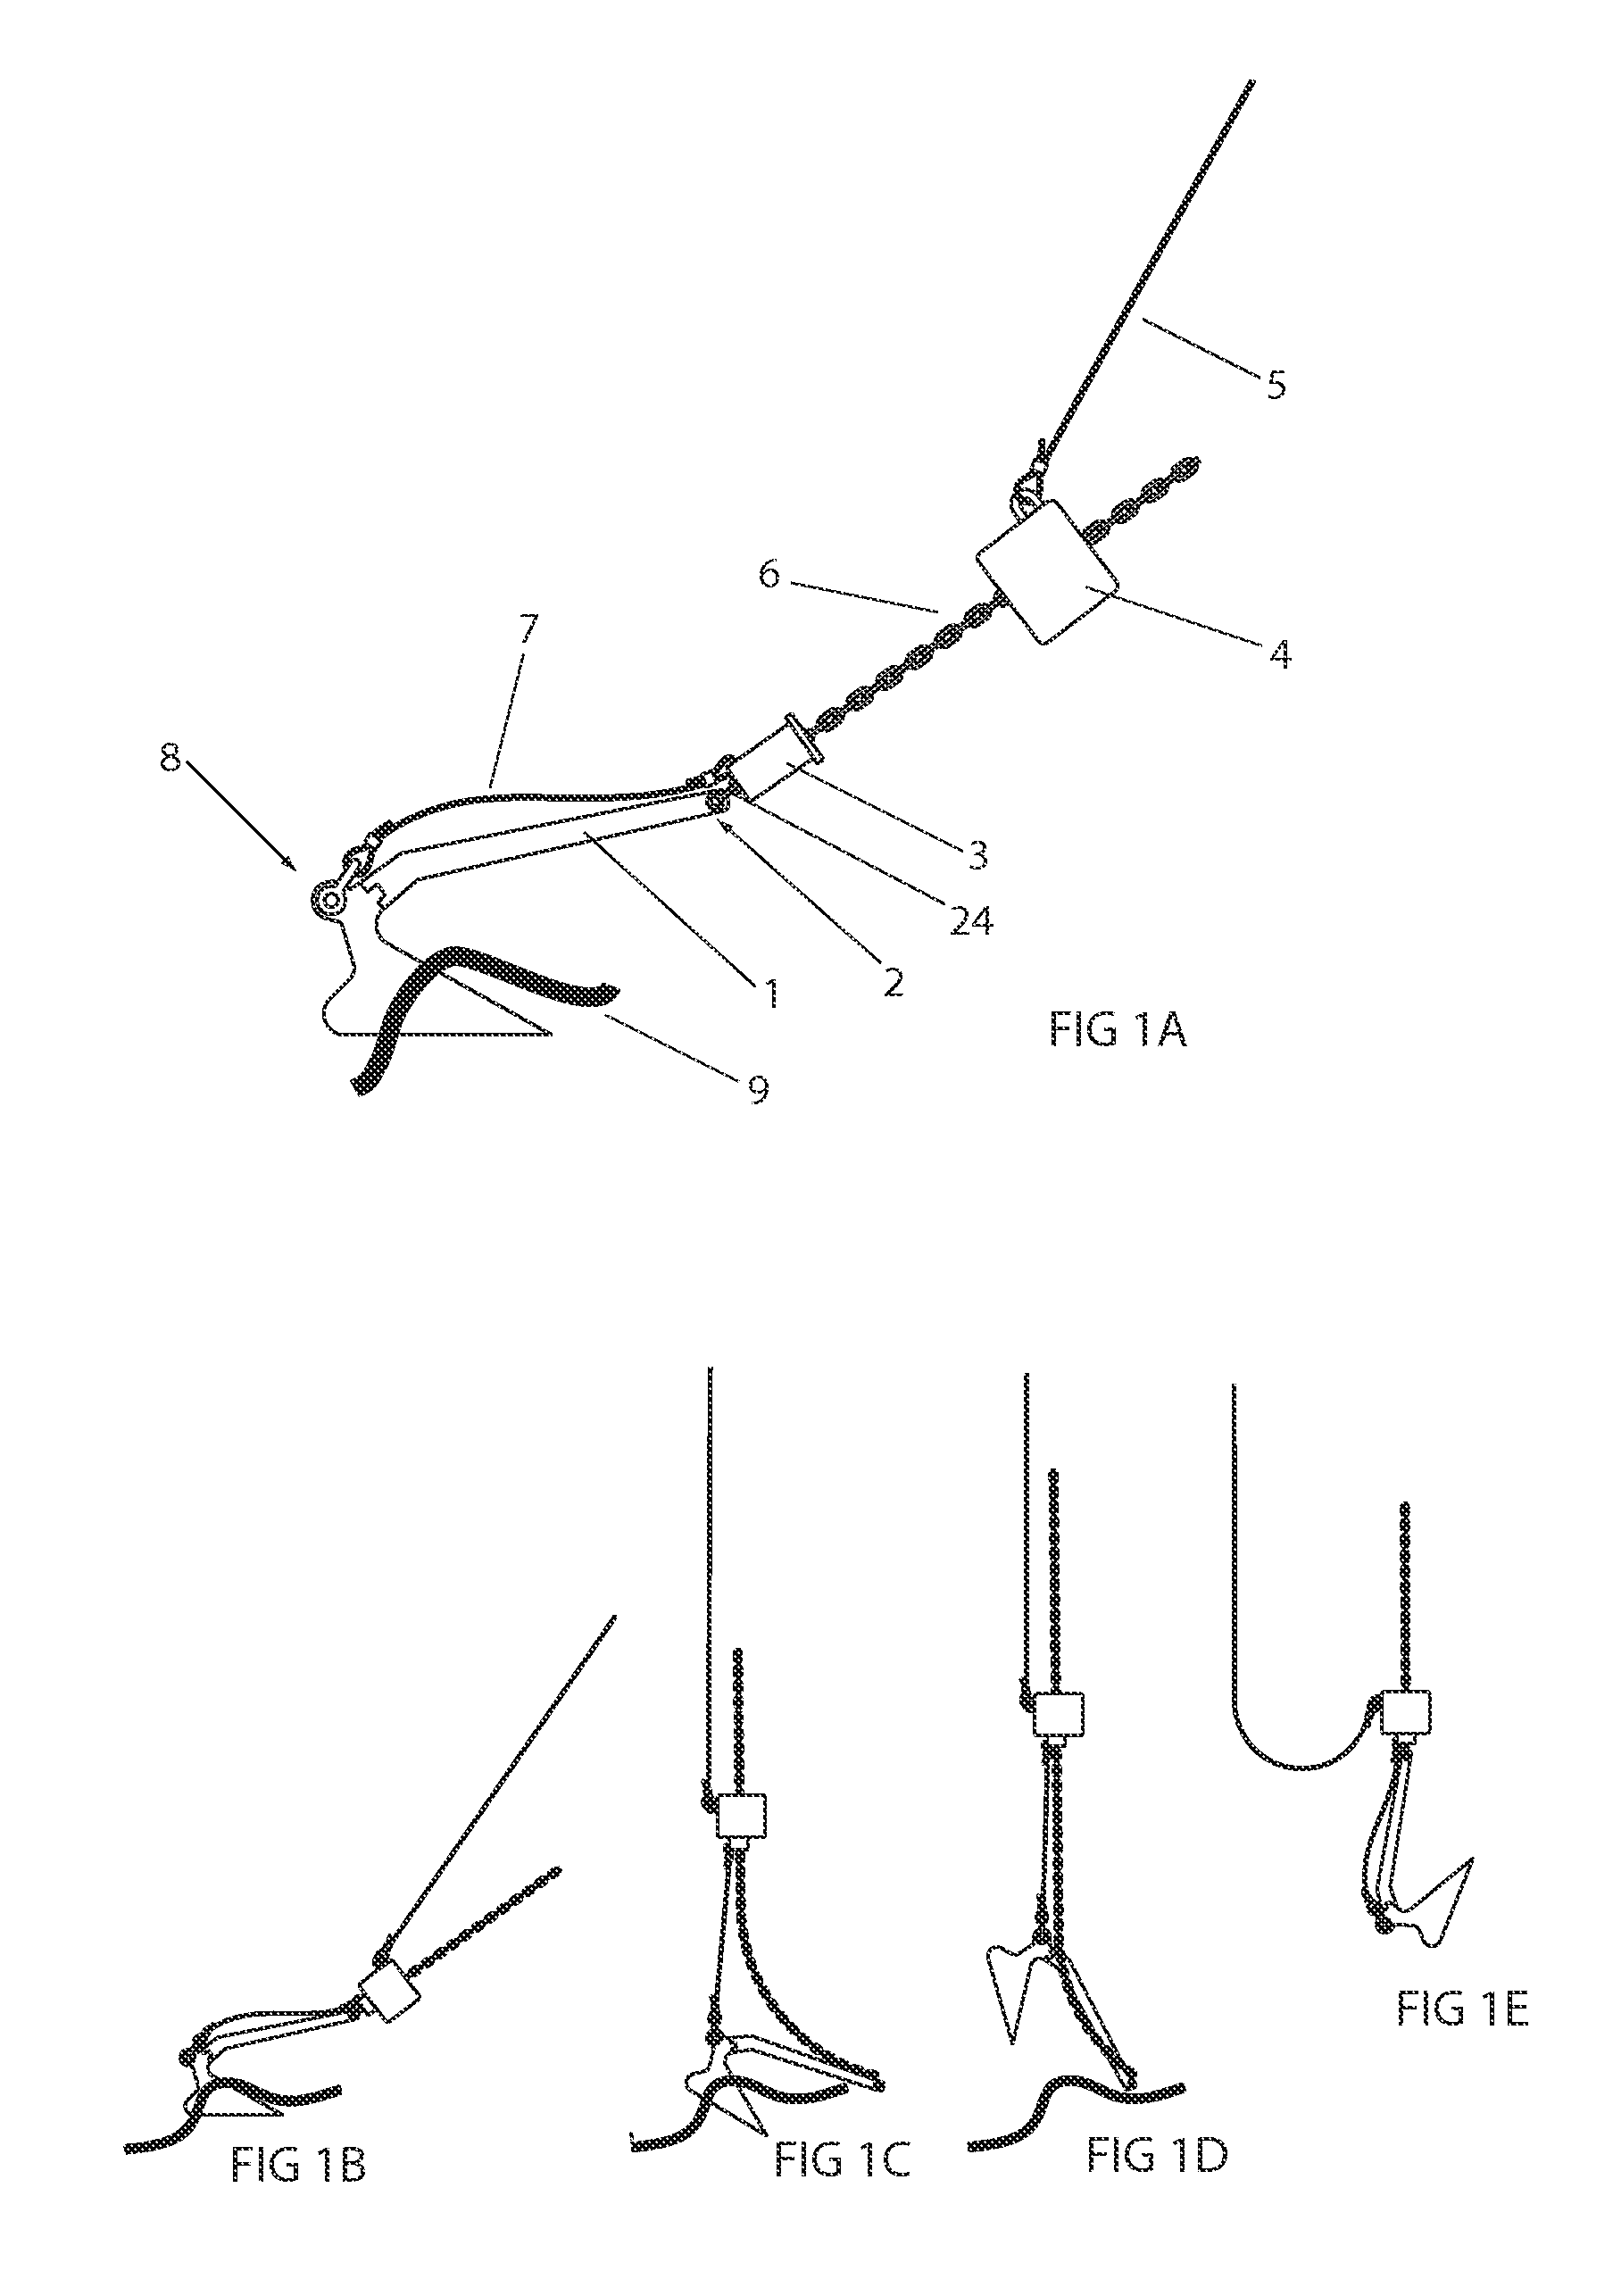 Anchor Retrieval System (ARS)